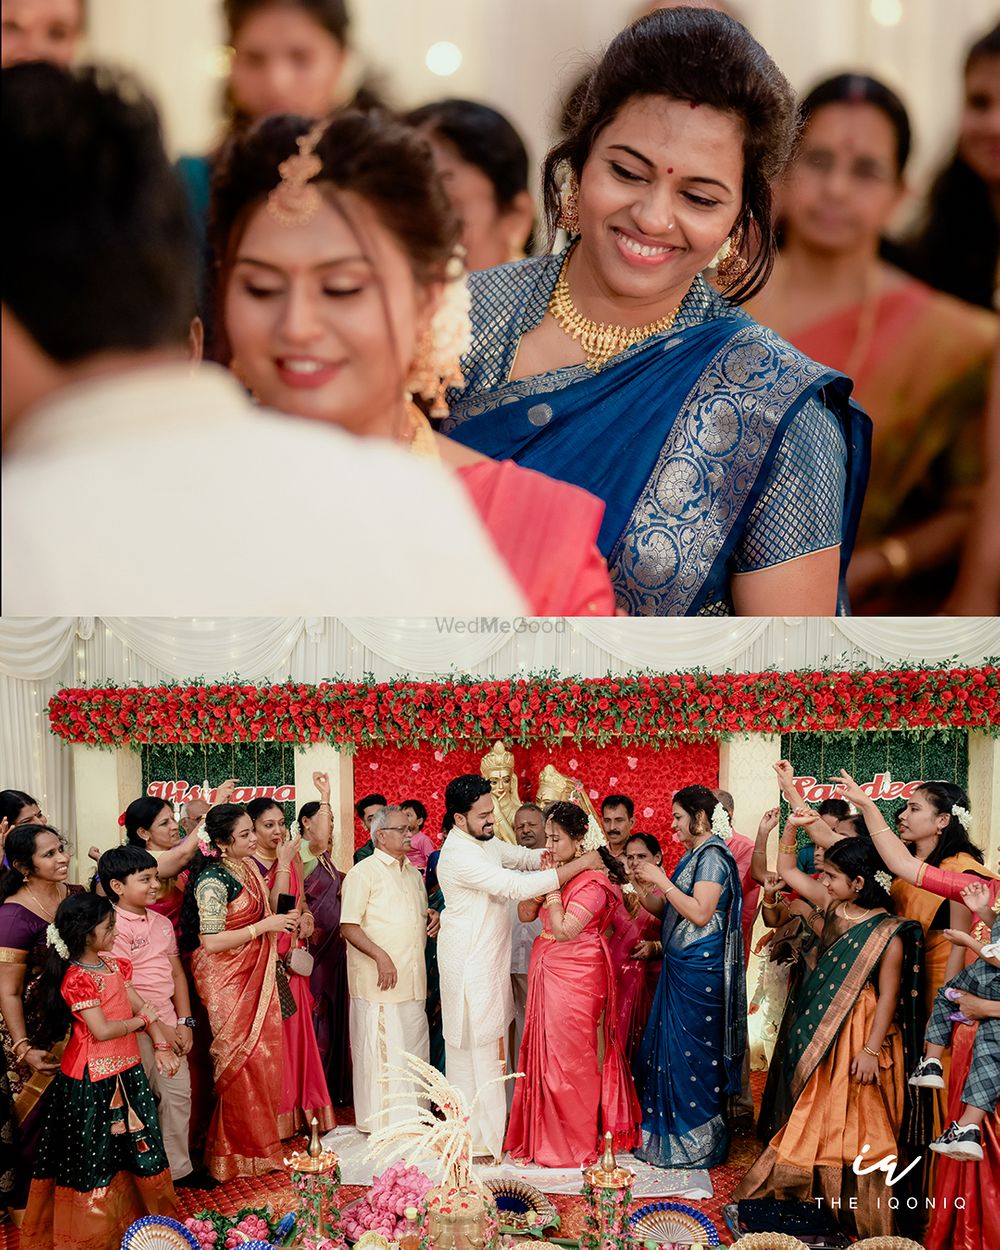 Photo From Sandeep Vismaya - By The IQONIQ Weddings